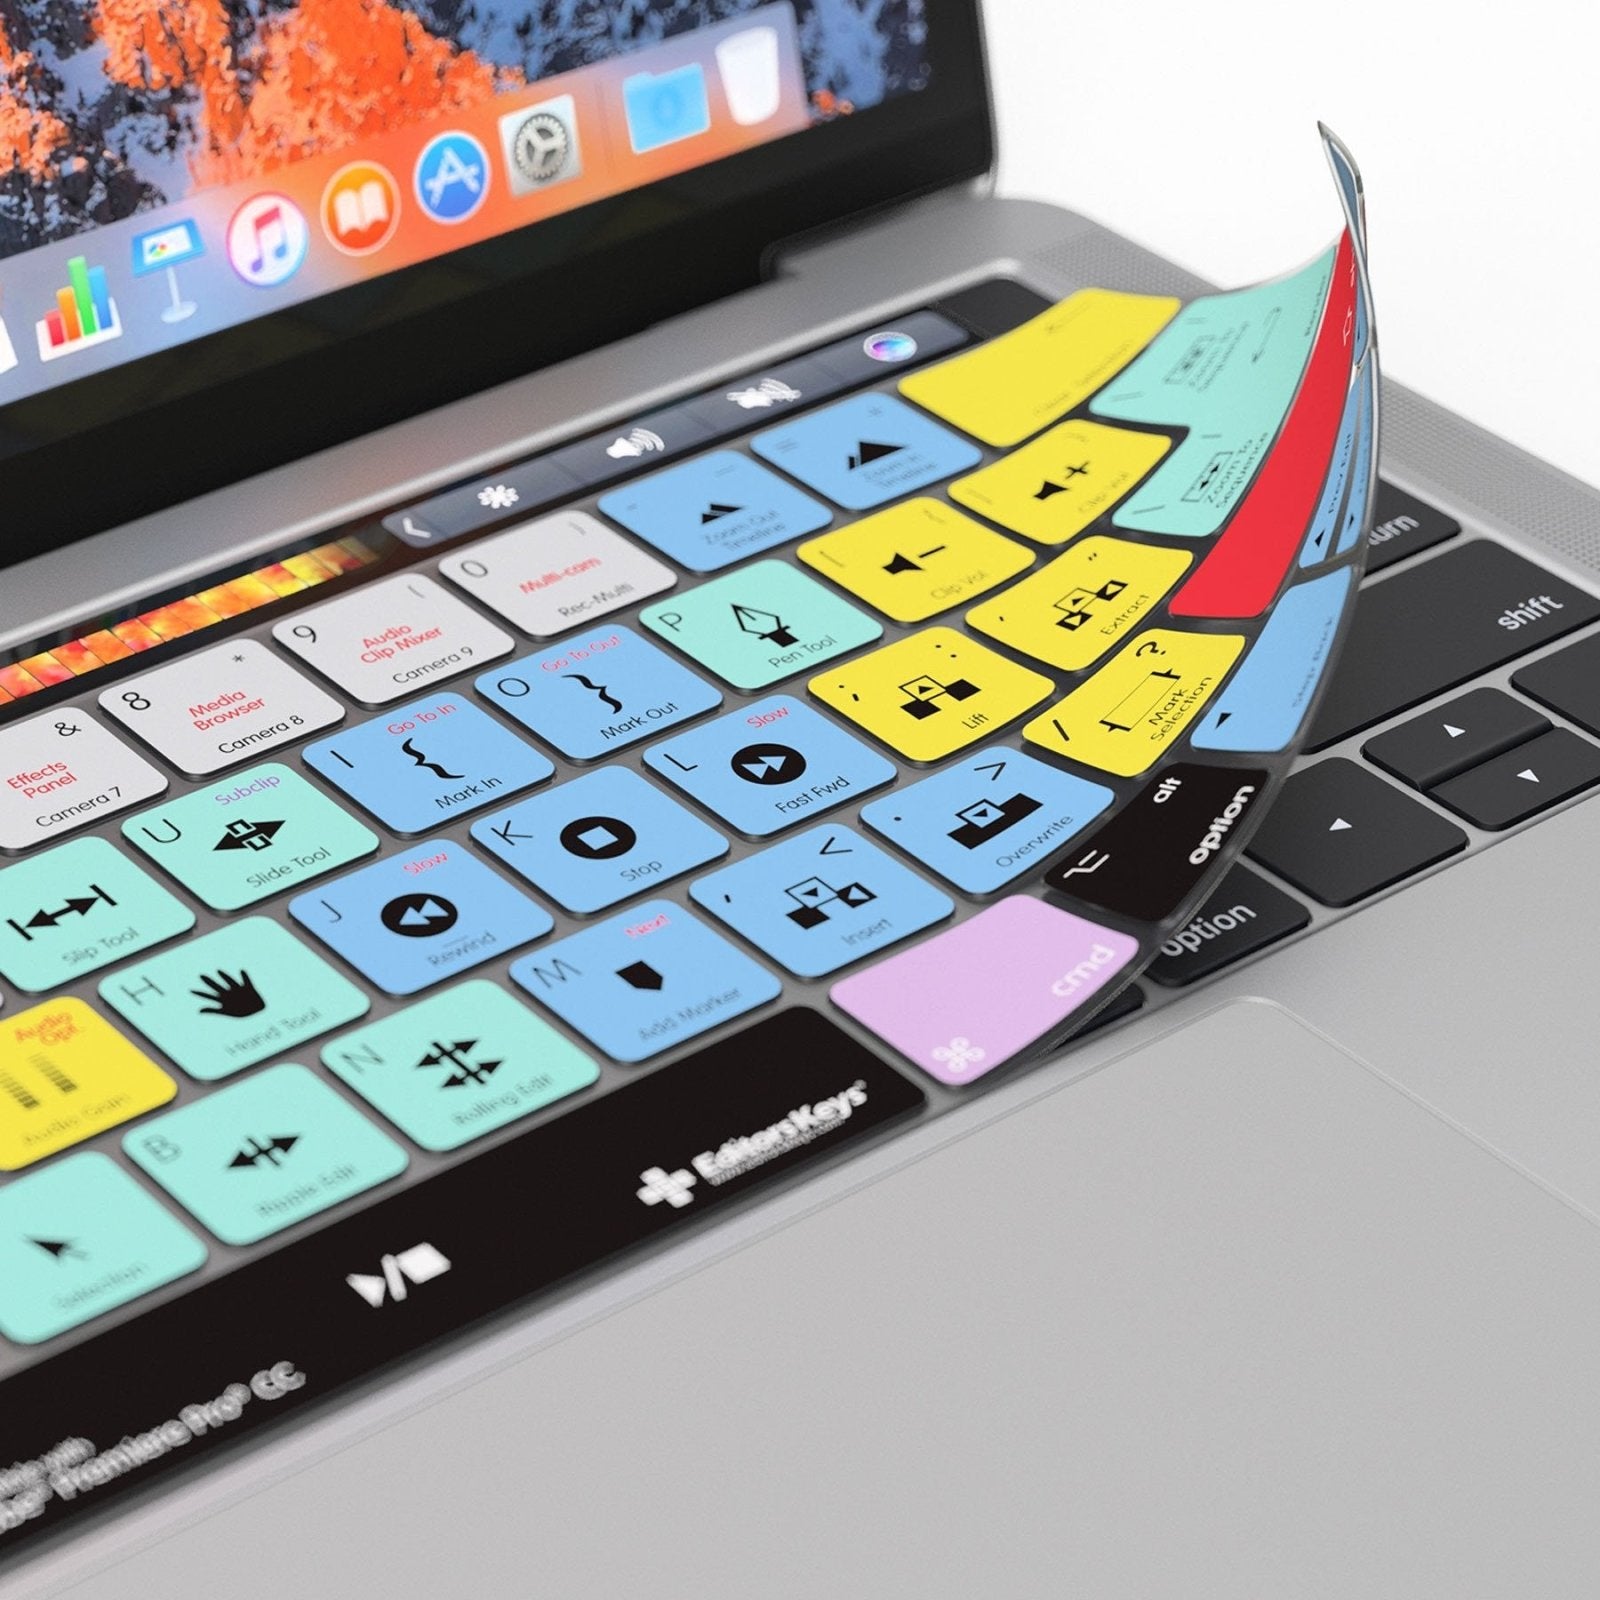 Adobe Premiere Keyboard Covers for MacBook and iMac - Editors Keys